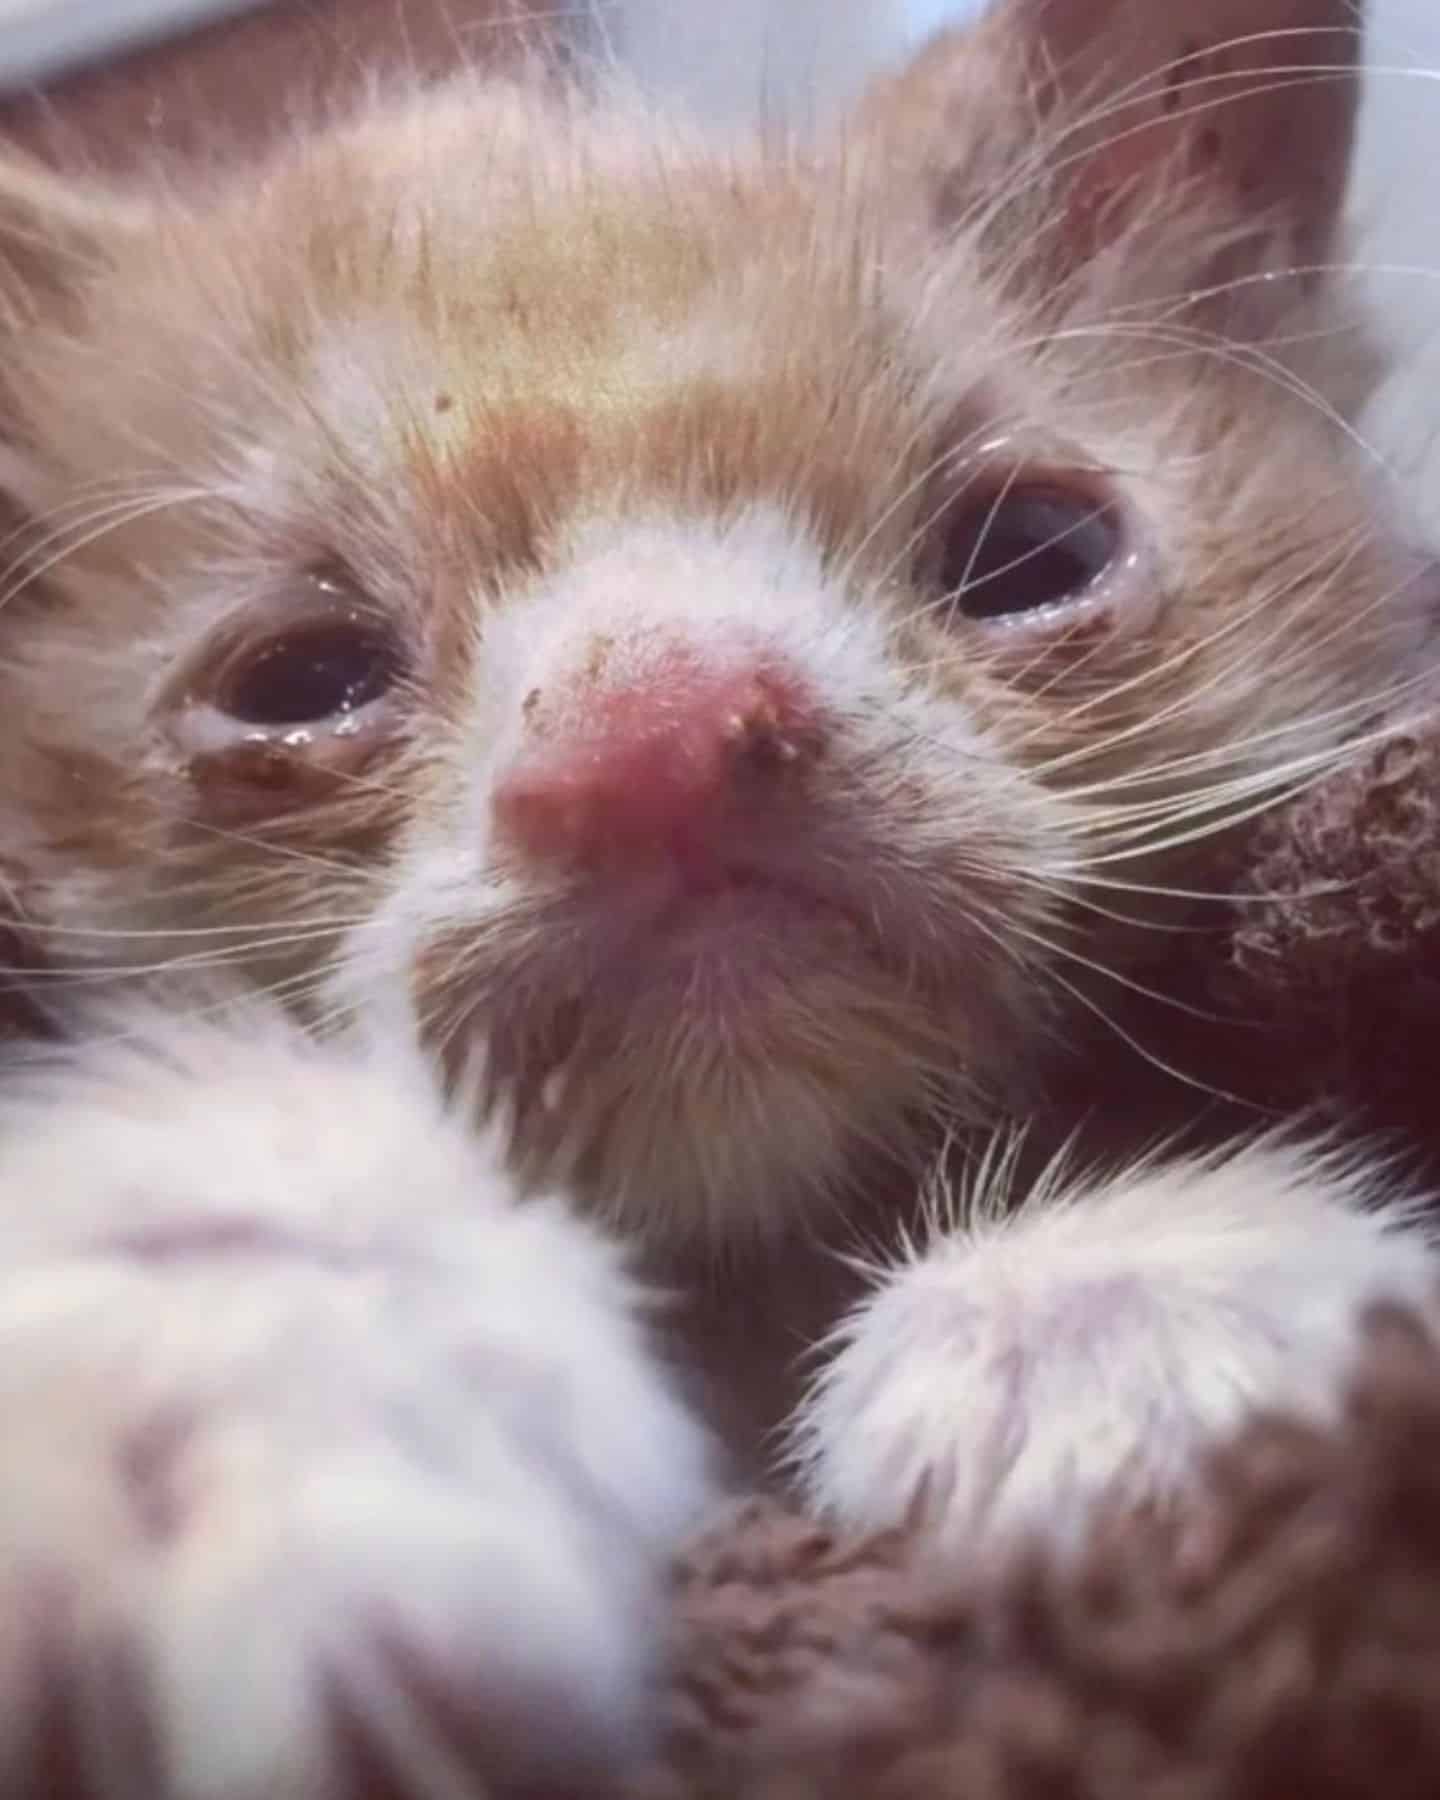 close-up photo of kitten with deformities